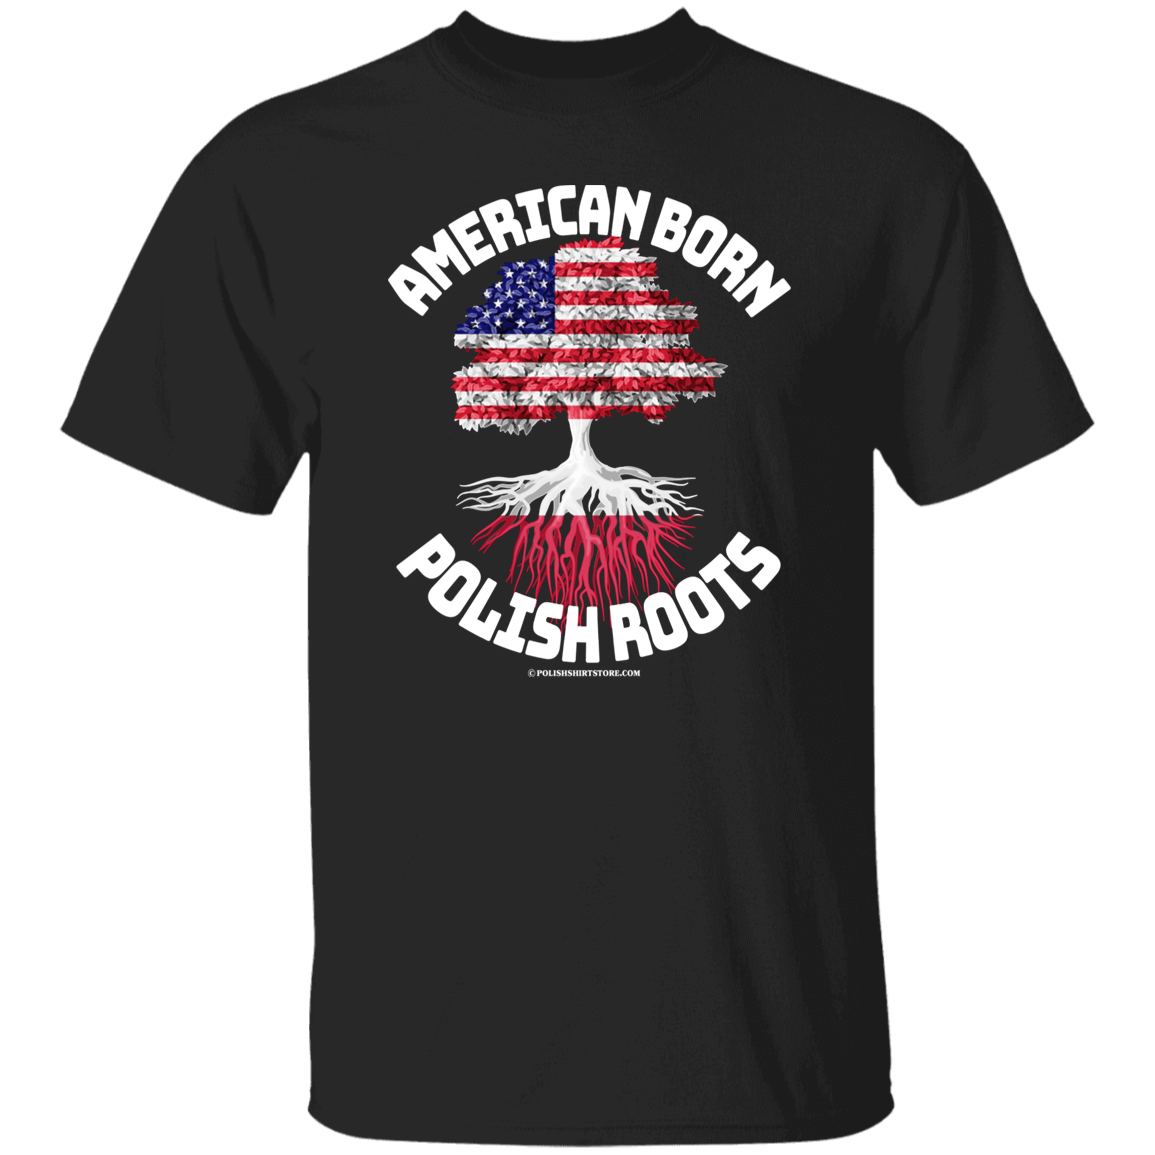 American Born Polish Roots Apparel CustomCat G500 5.3 oz. T-Shirt Black S